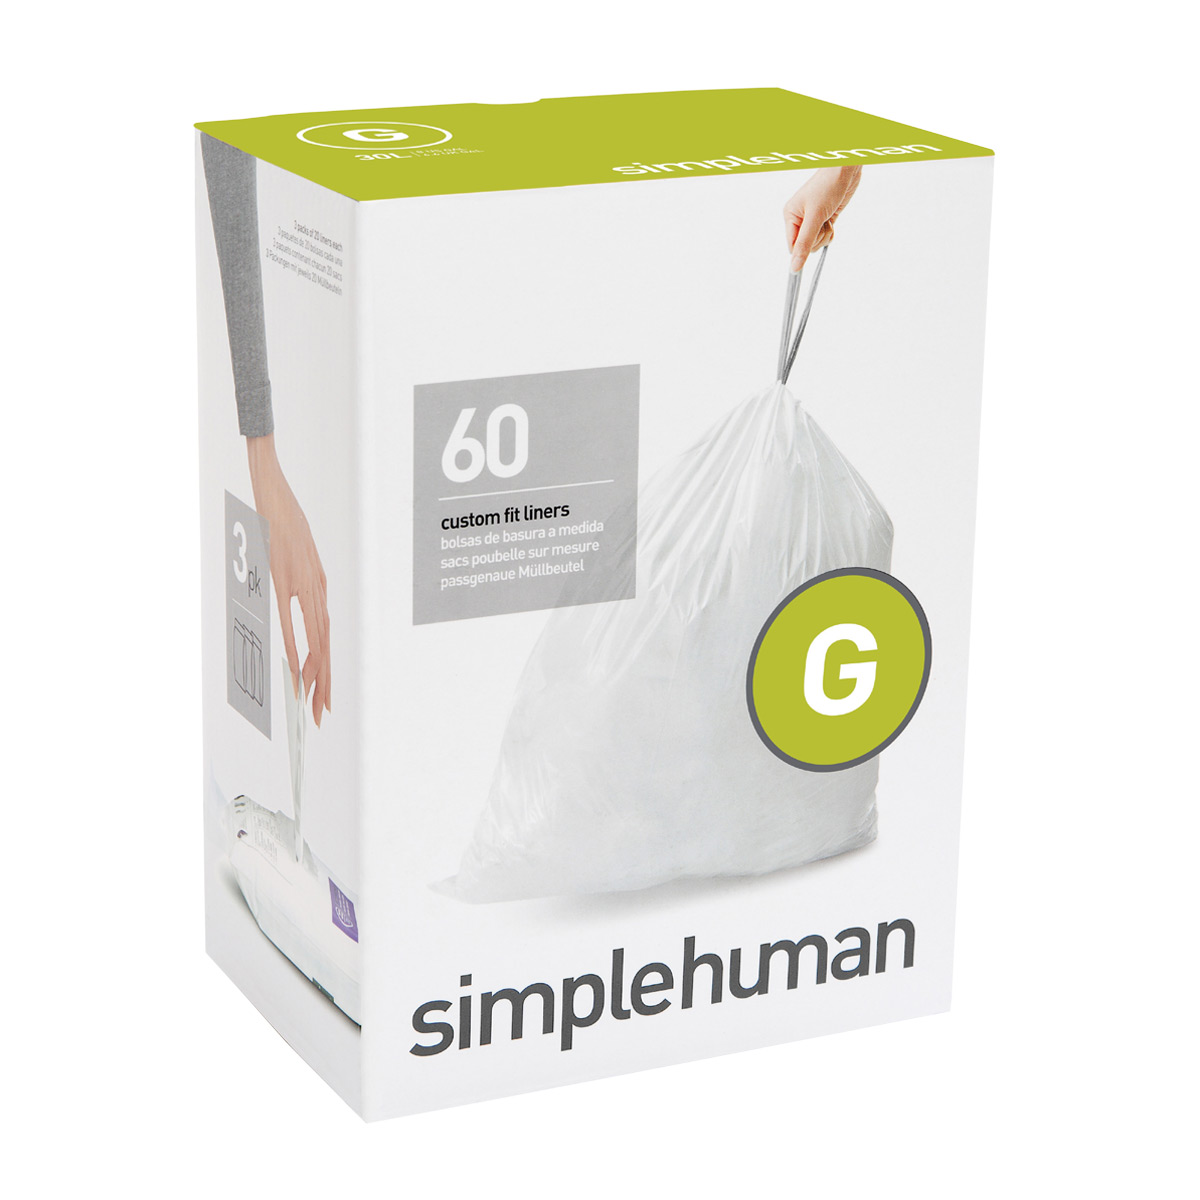 CW0255 bin bag liner Simplehuman 60 3 Packs x 20 20 litres code/size E 